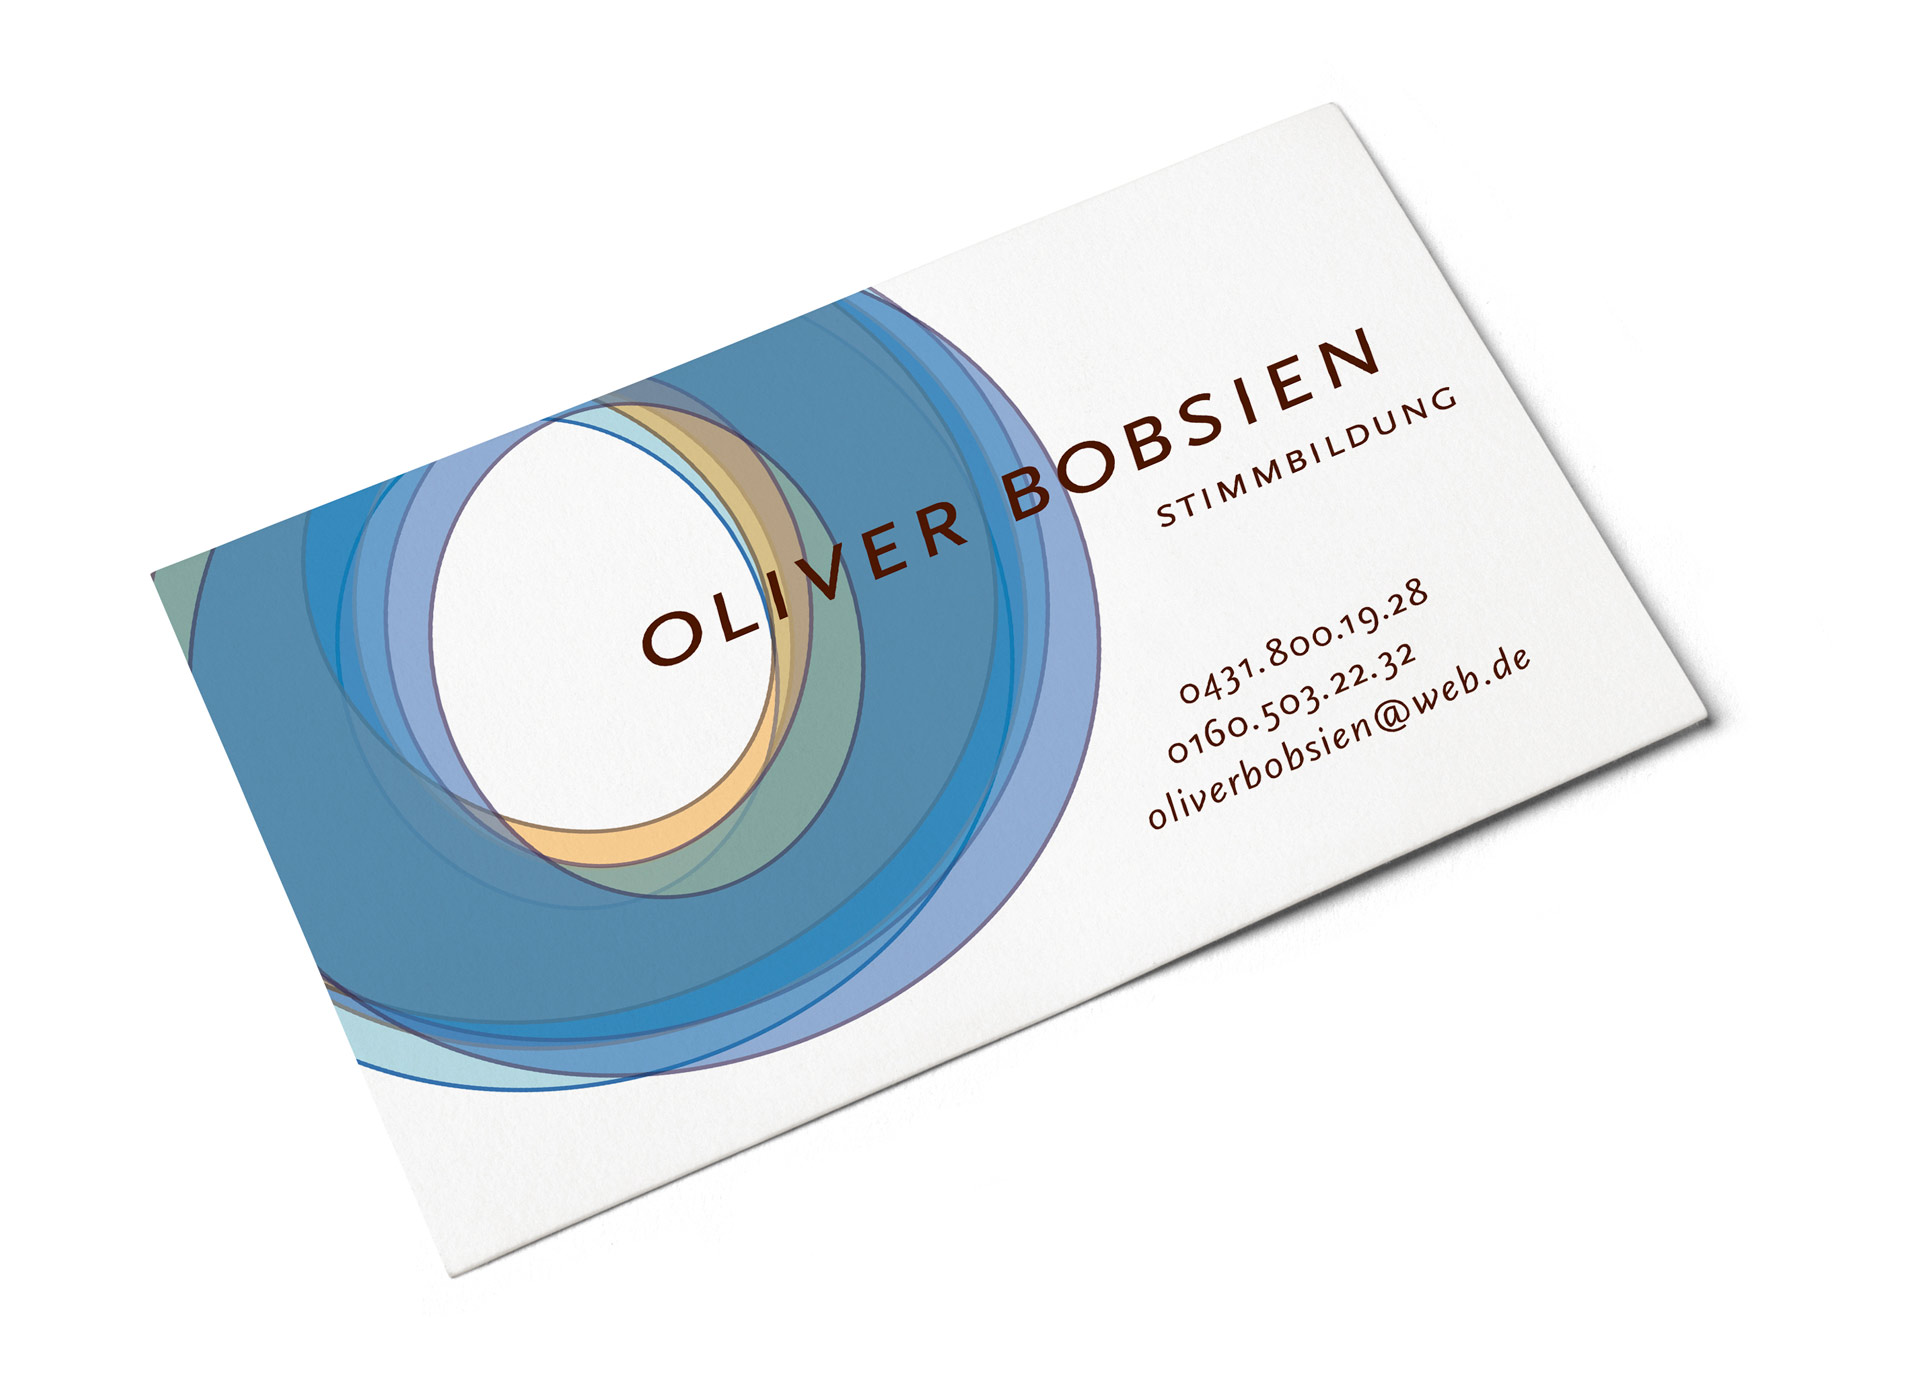 Oliver Bobsien - Stationary Design by Antonia Wibke Heidelmann